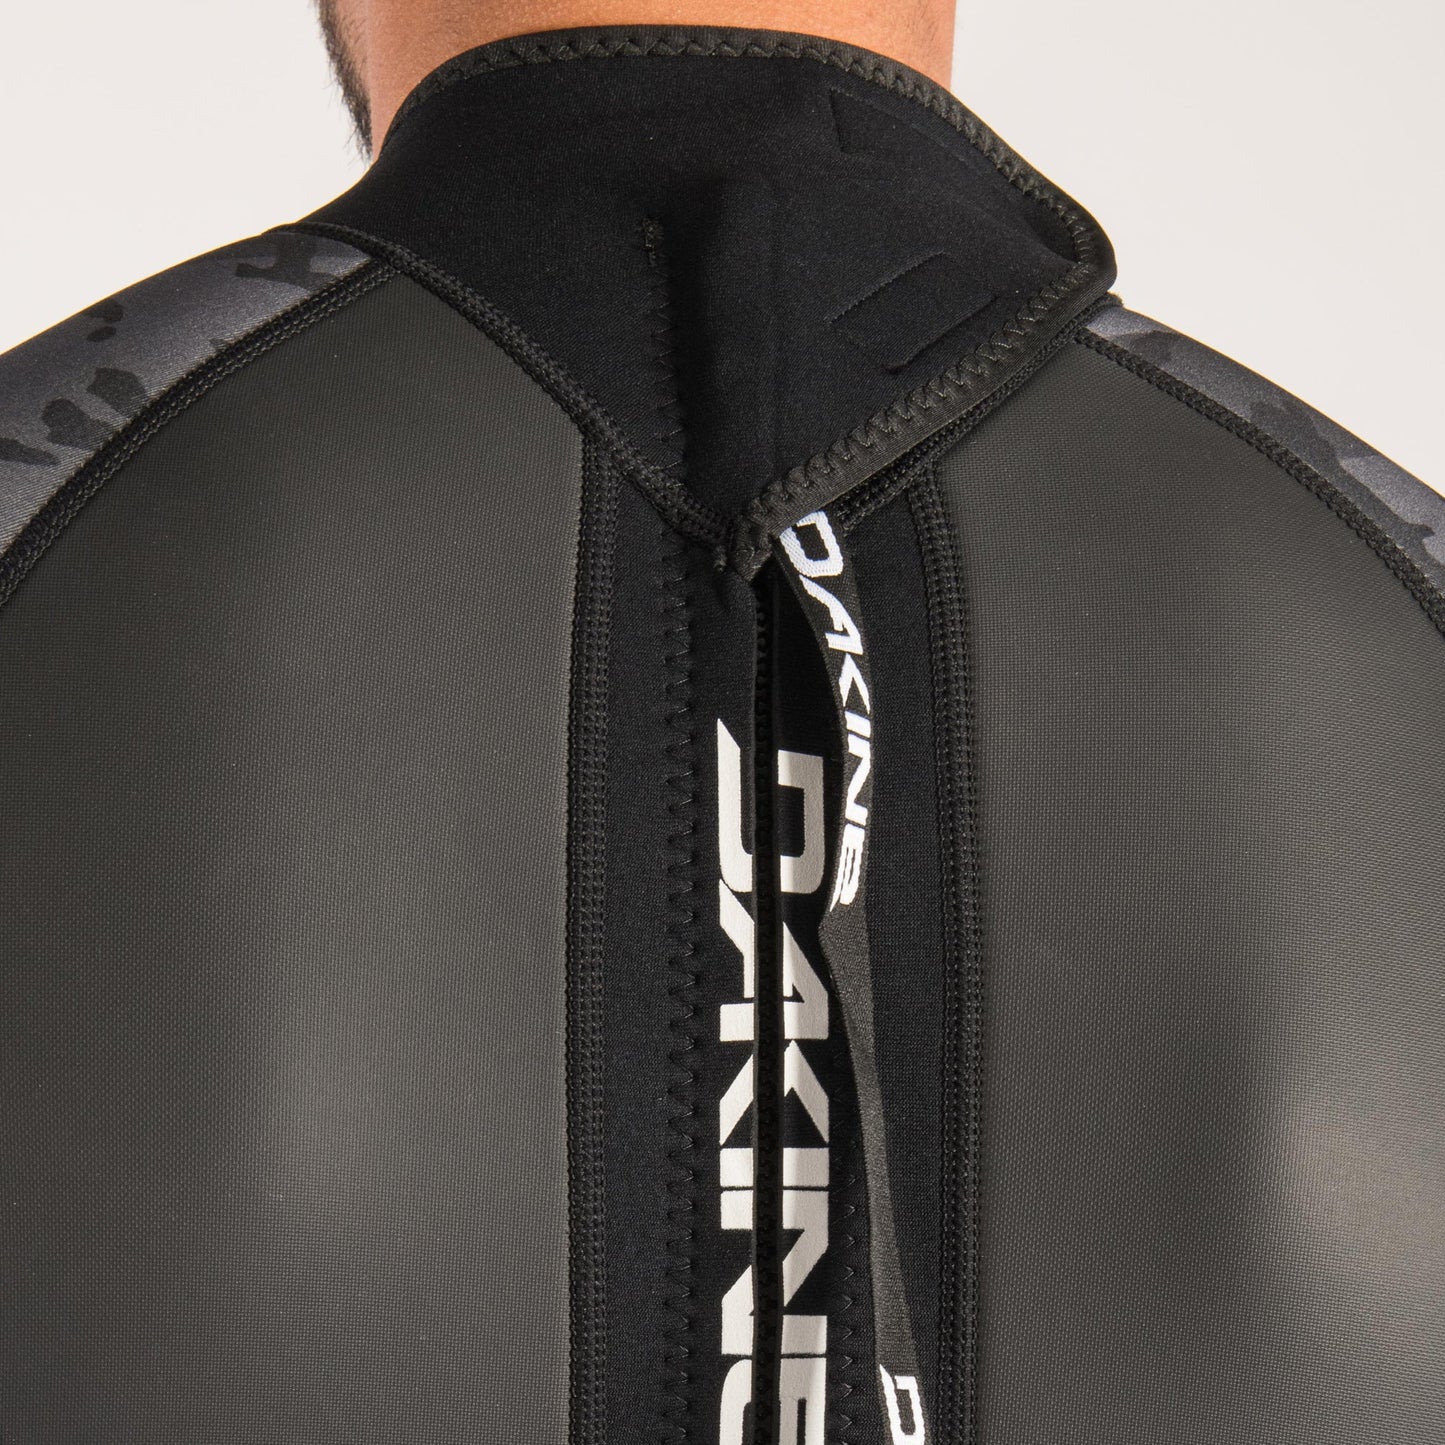 Mens Quantum Back Zip 3/2mm F/L Full Wetsuit (Black Camo / White)